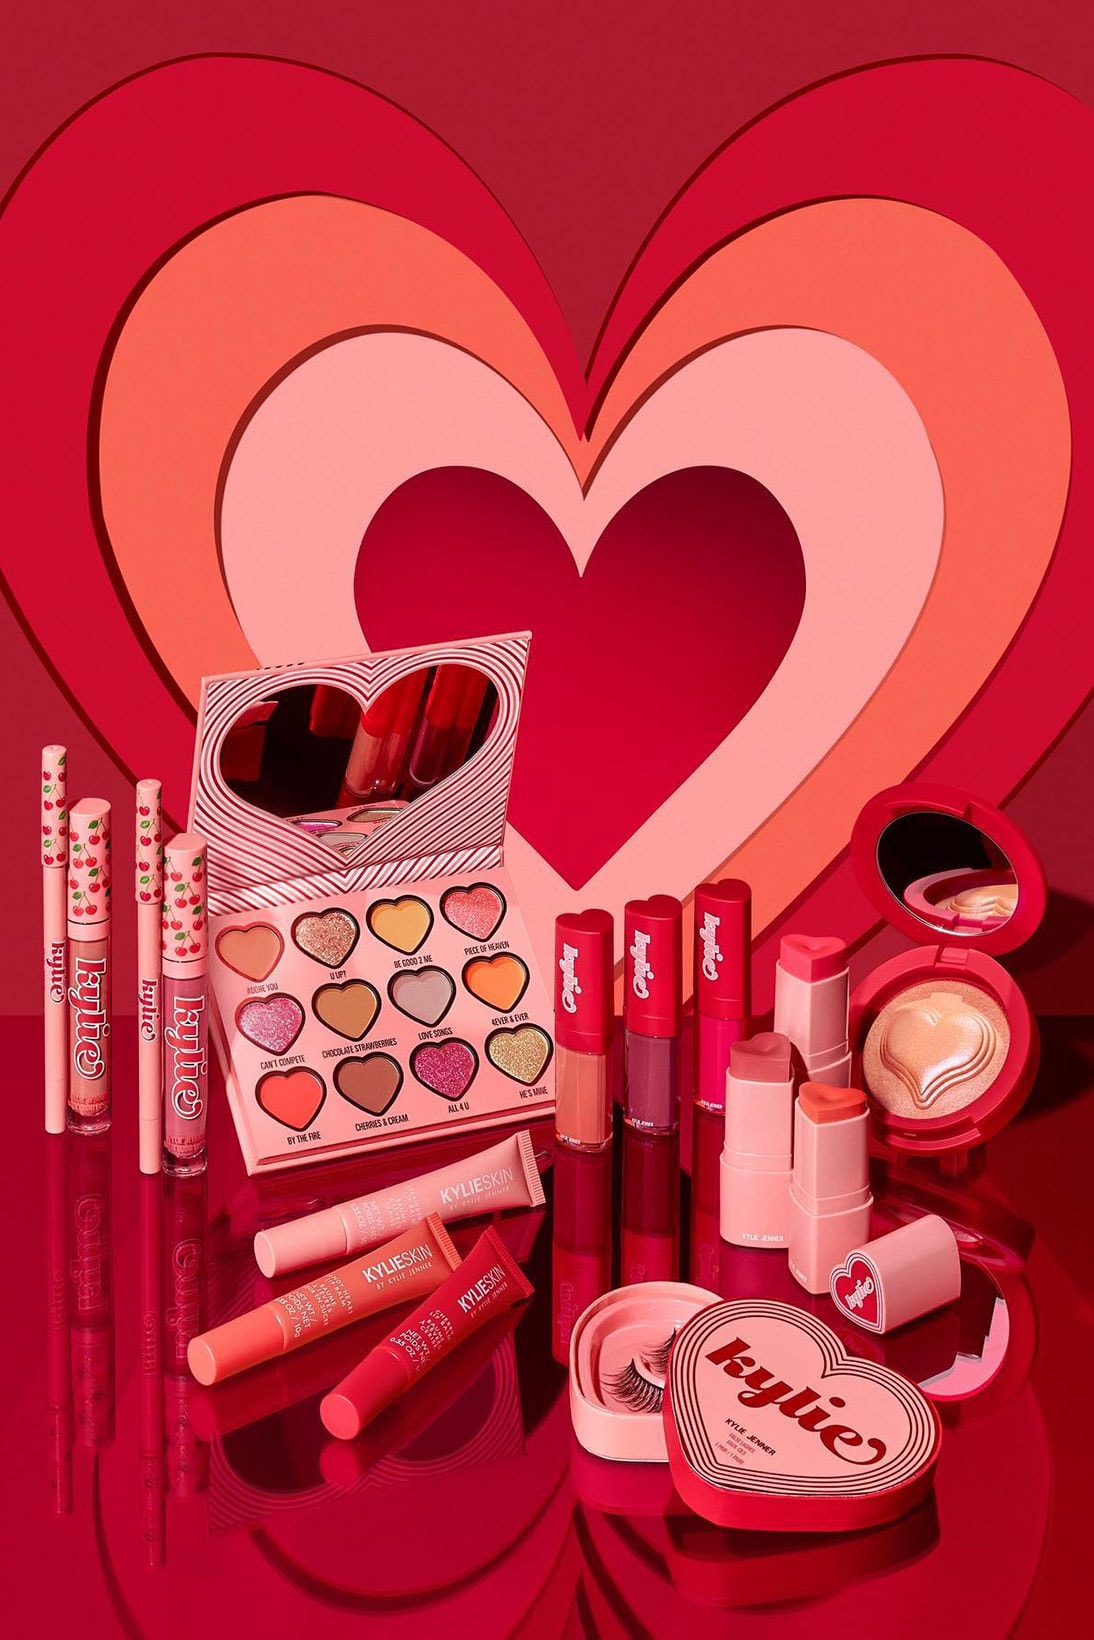 Kylie Jenner Cosmetics Valentines Day Collection Makeup Eyeshadow Palette Lip Kits Lipsticks Gloss Blush Highlighter